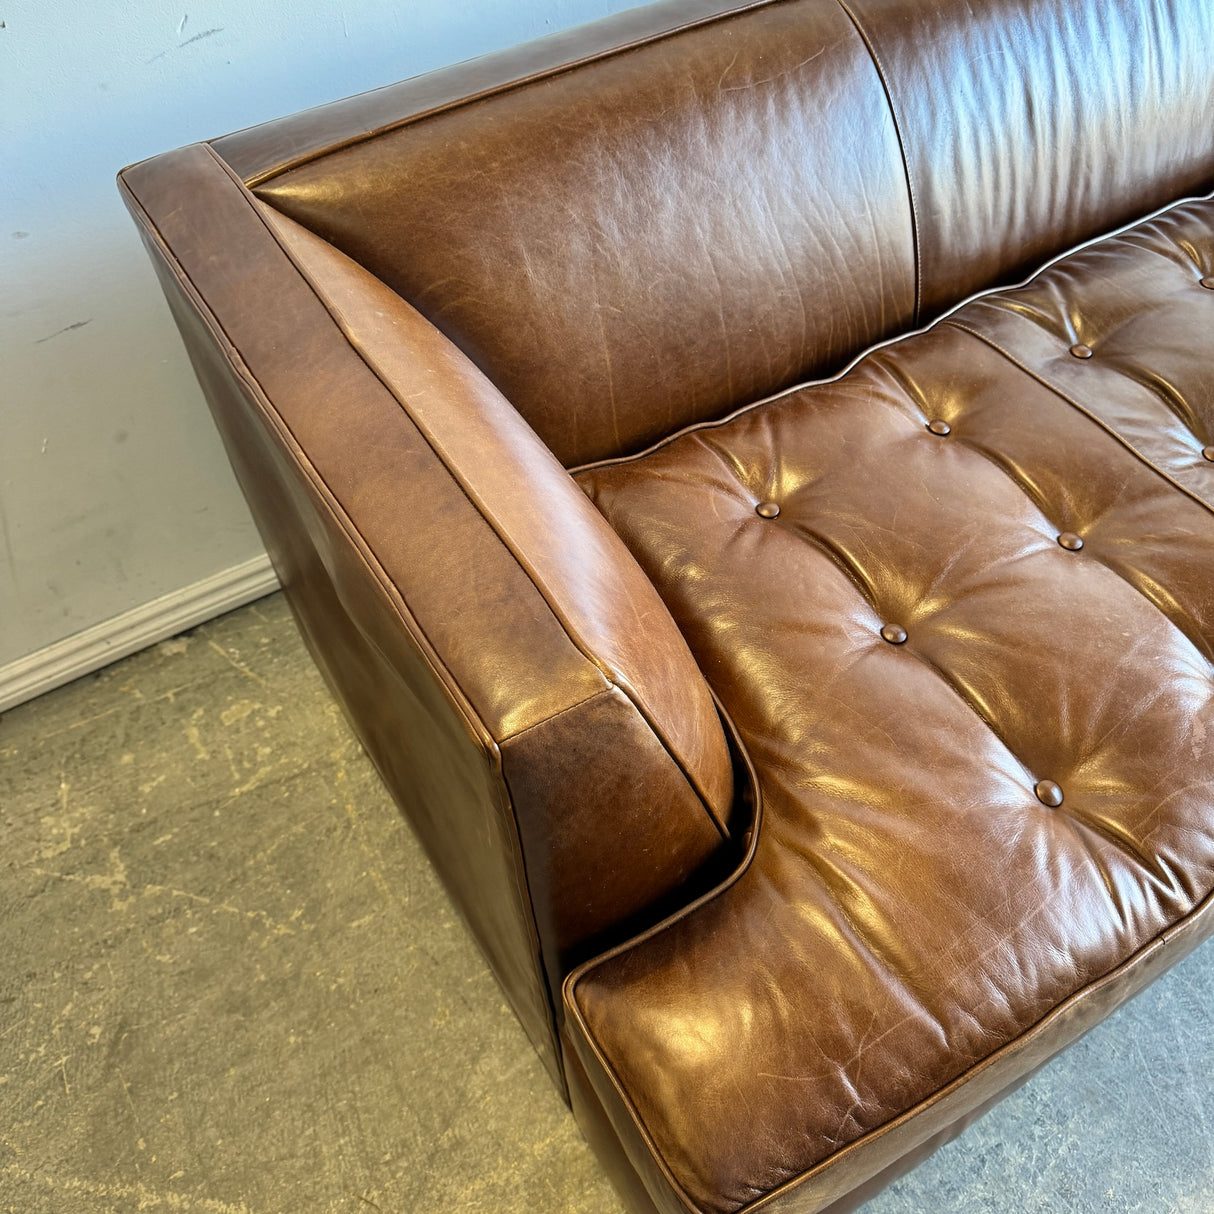 Mitchell Gold + Bob Williams Leather Sleeper Sofa